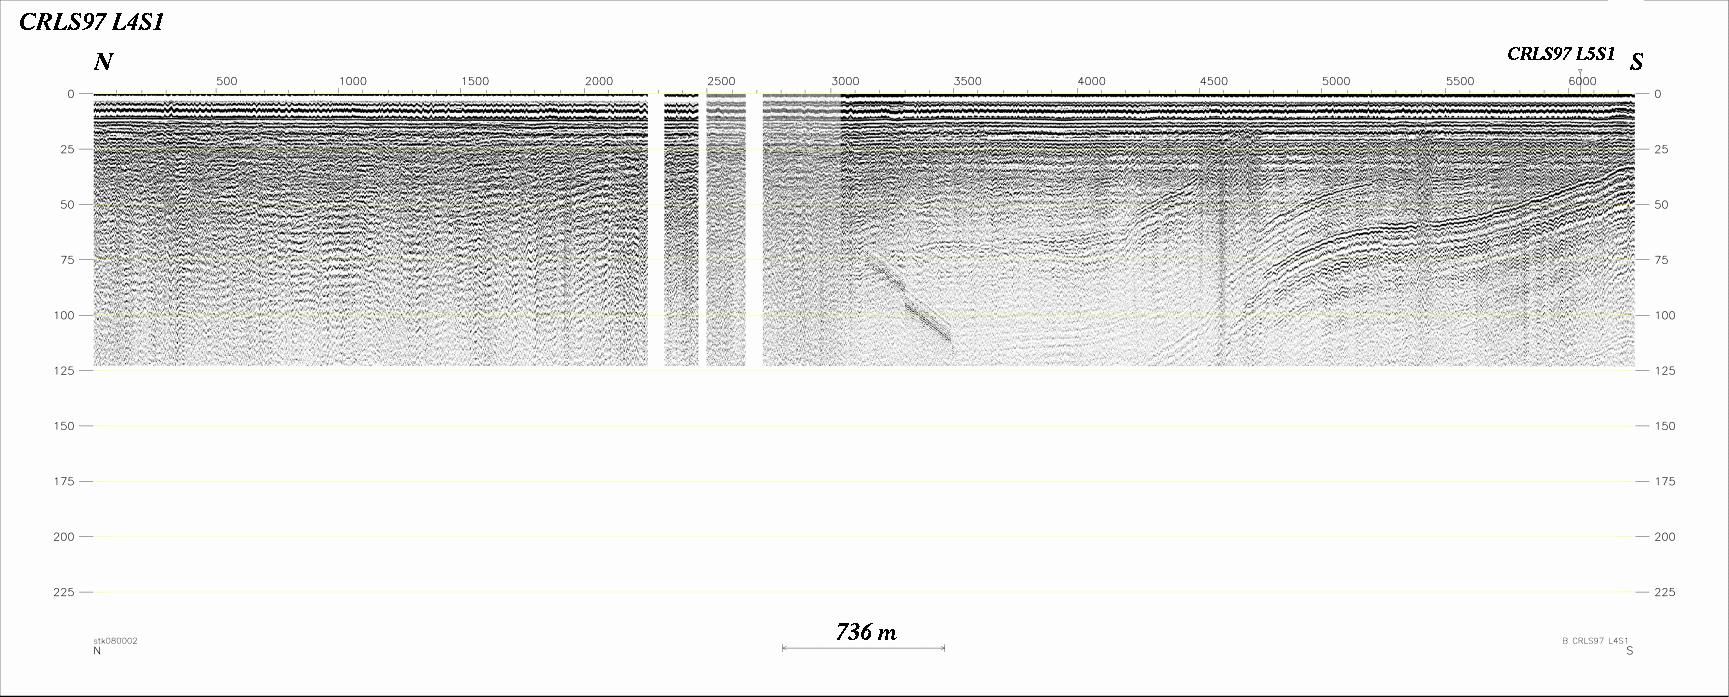 Seismic Reflection Profile Line No.: L4s1 (217376 bytes)